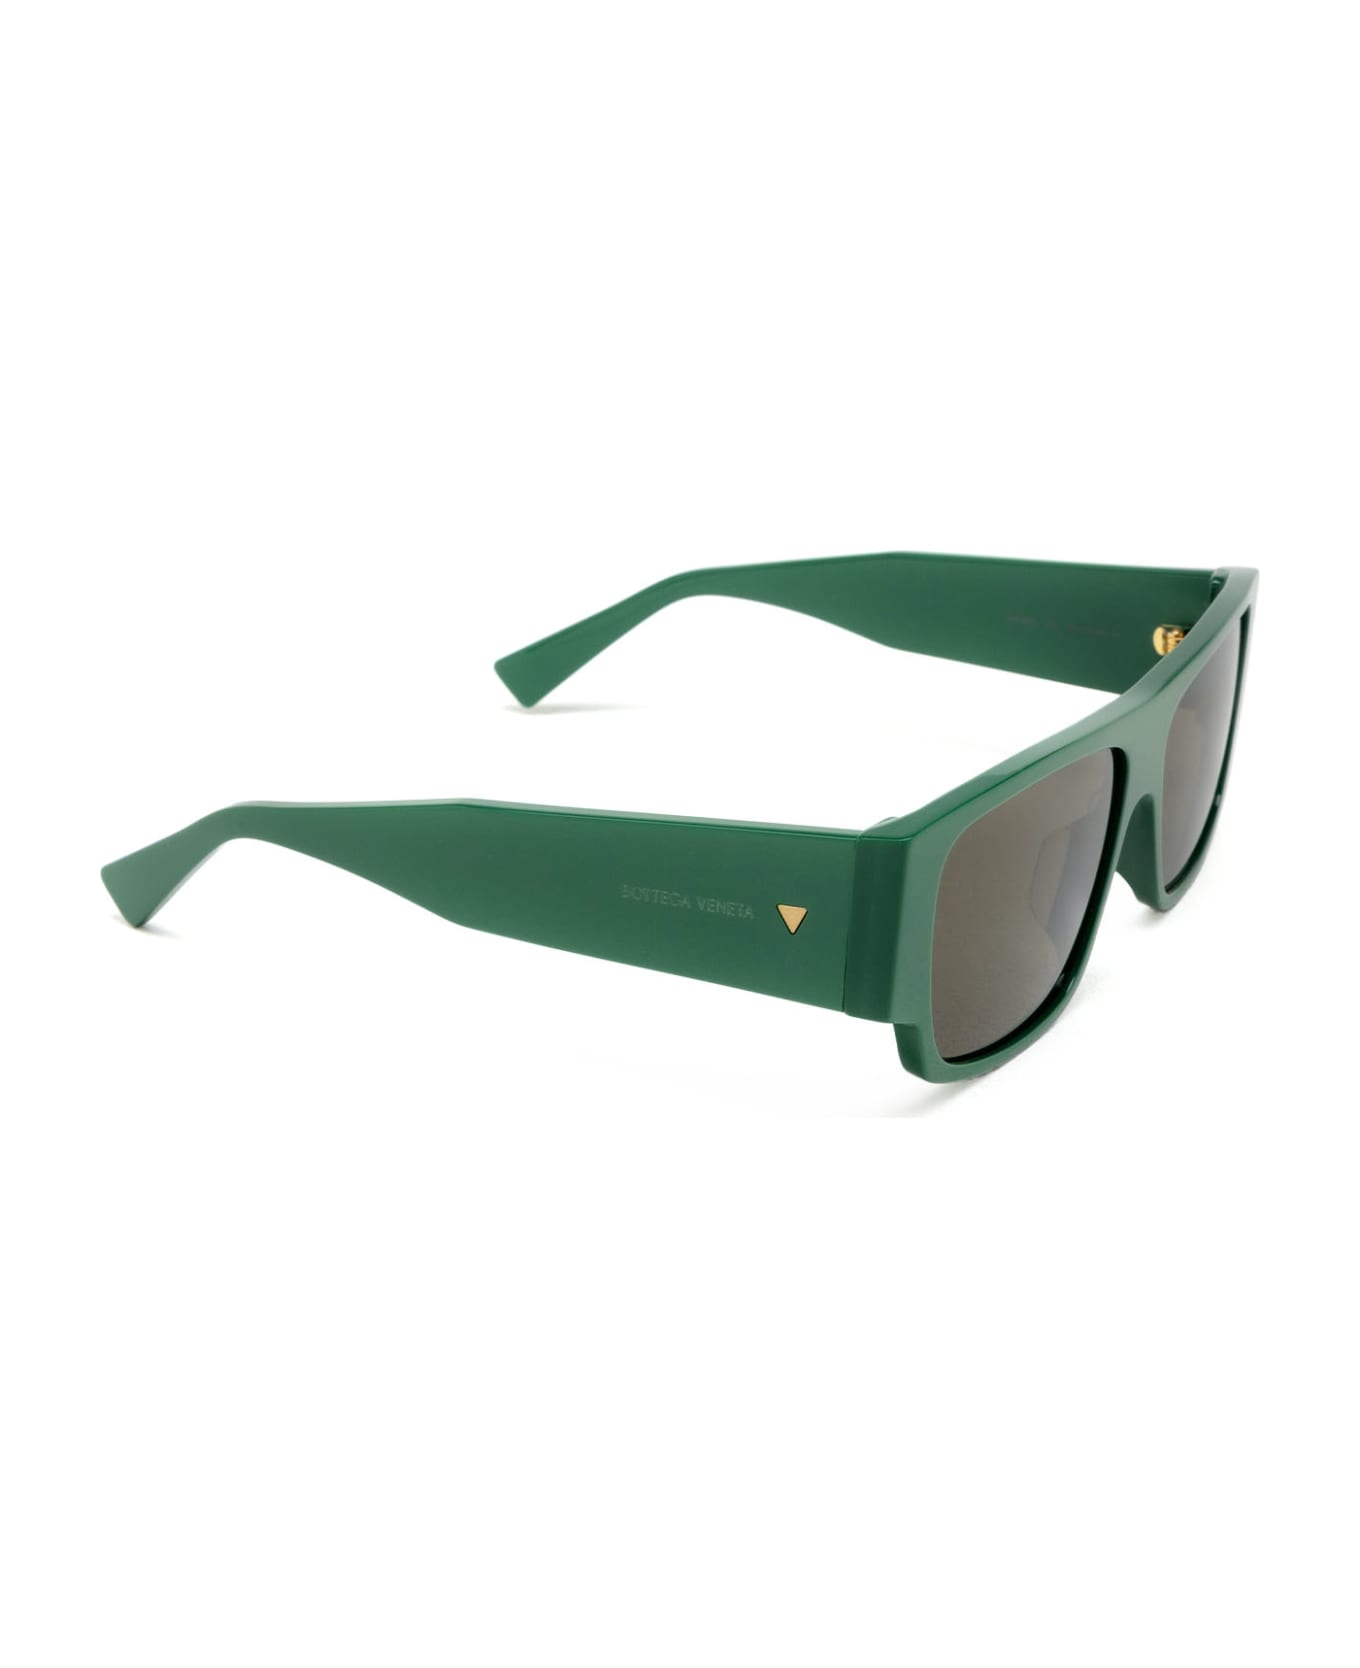 Bottega Veneta Eyewear Bv1286s Green Sunglasses - Green サングラス